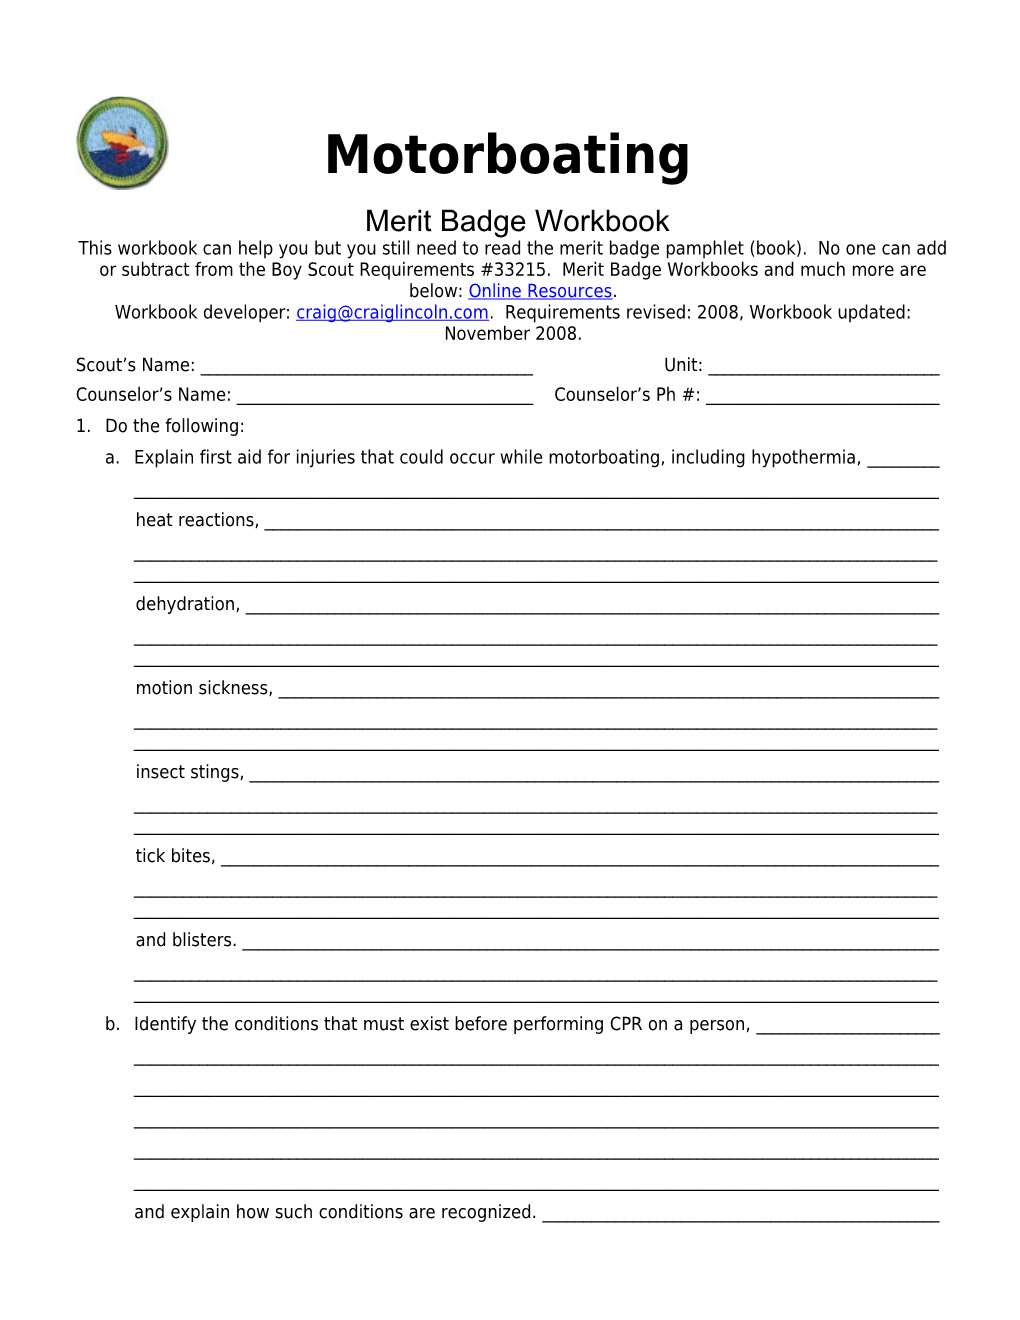 Motorboating P. 1 Merit Badge Workbookscout's Name: ______